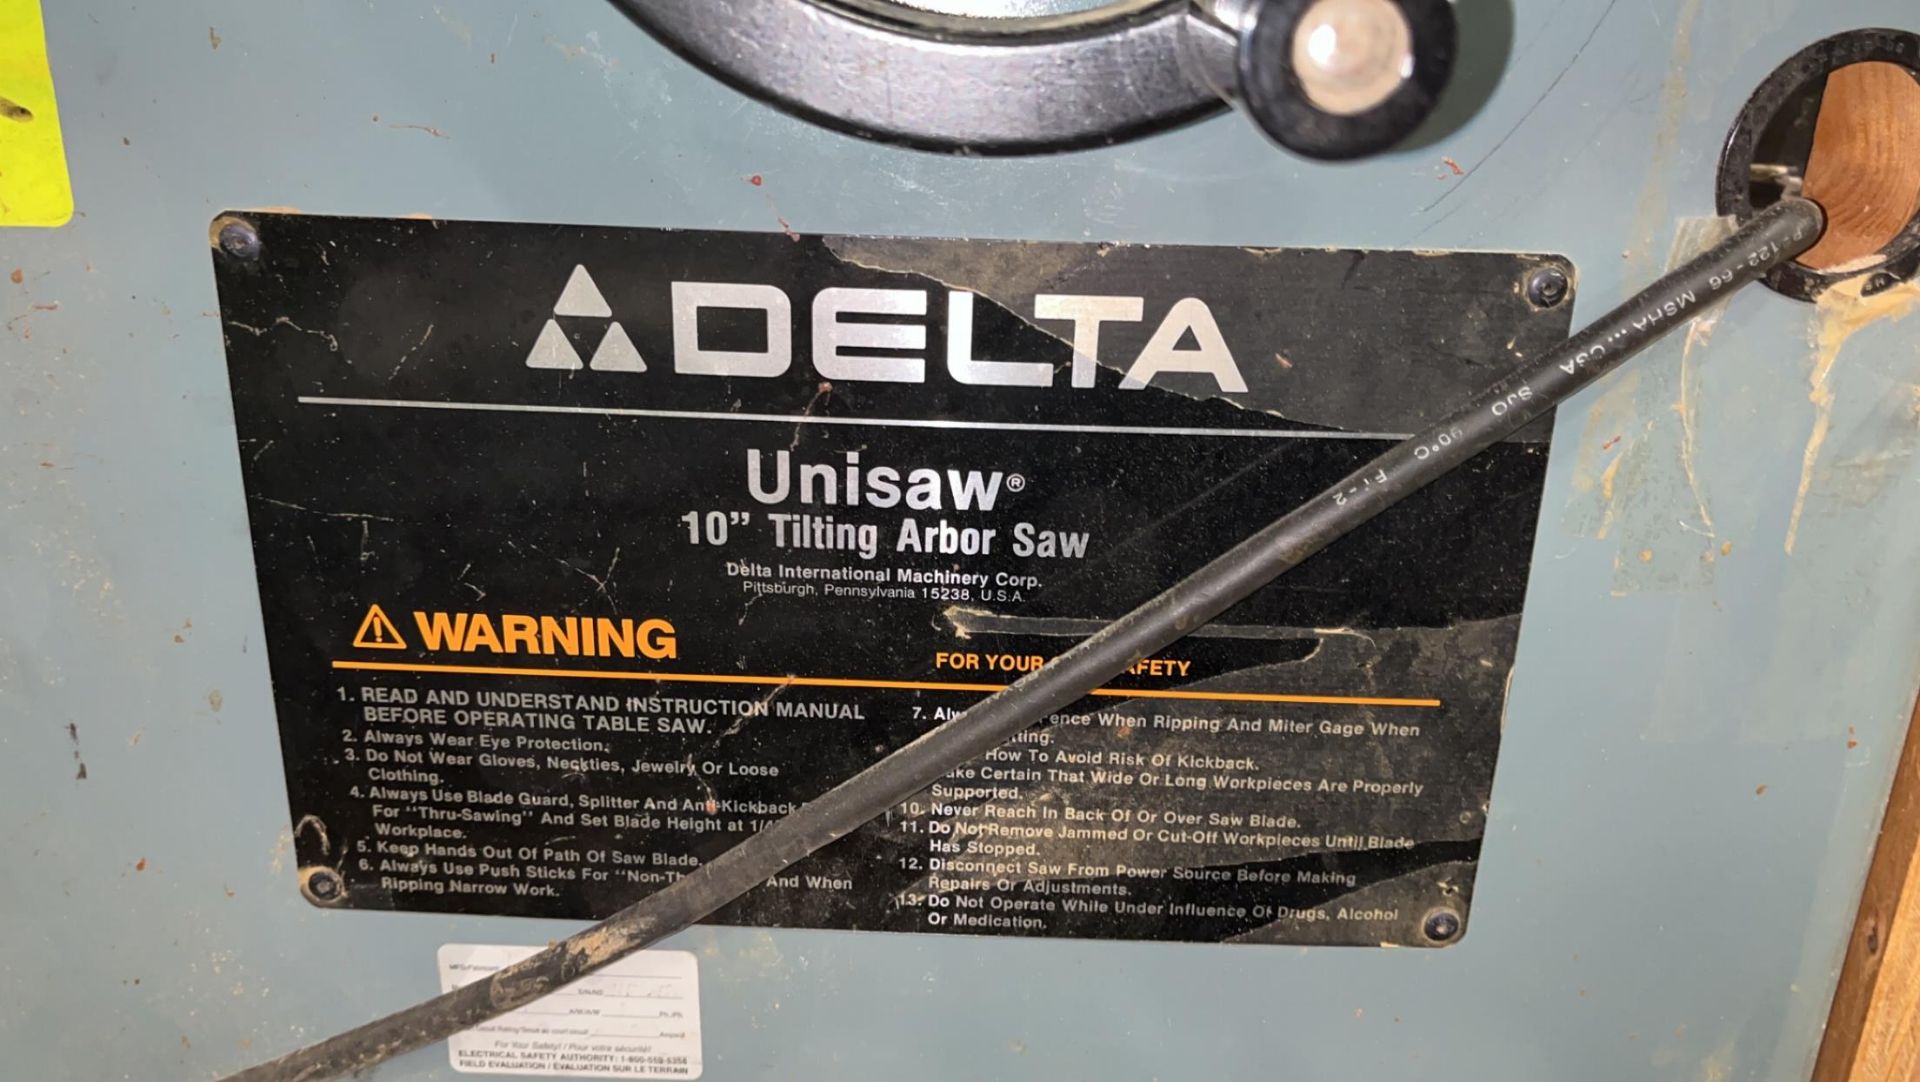 Delta Unisaw 34-450 10'' Tilting Arbor Saw - Image 4 of 8